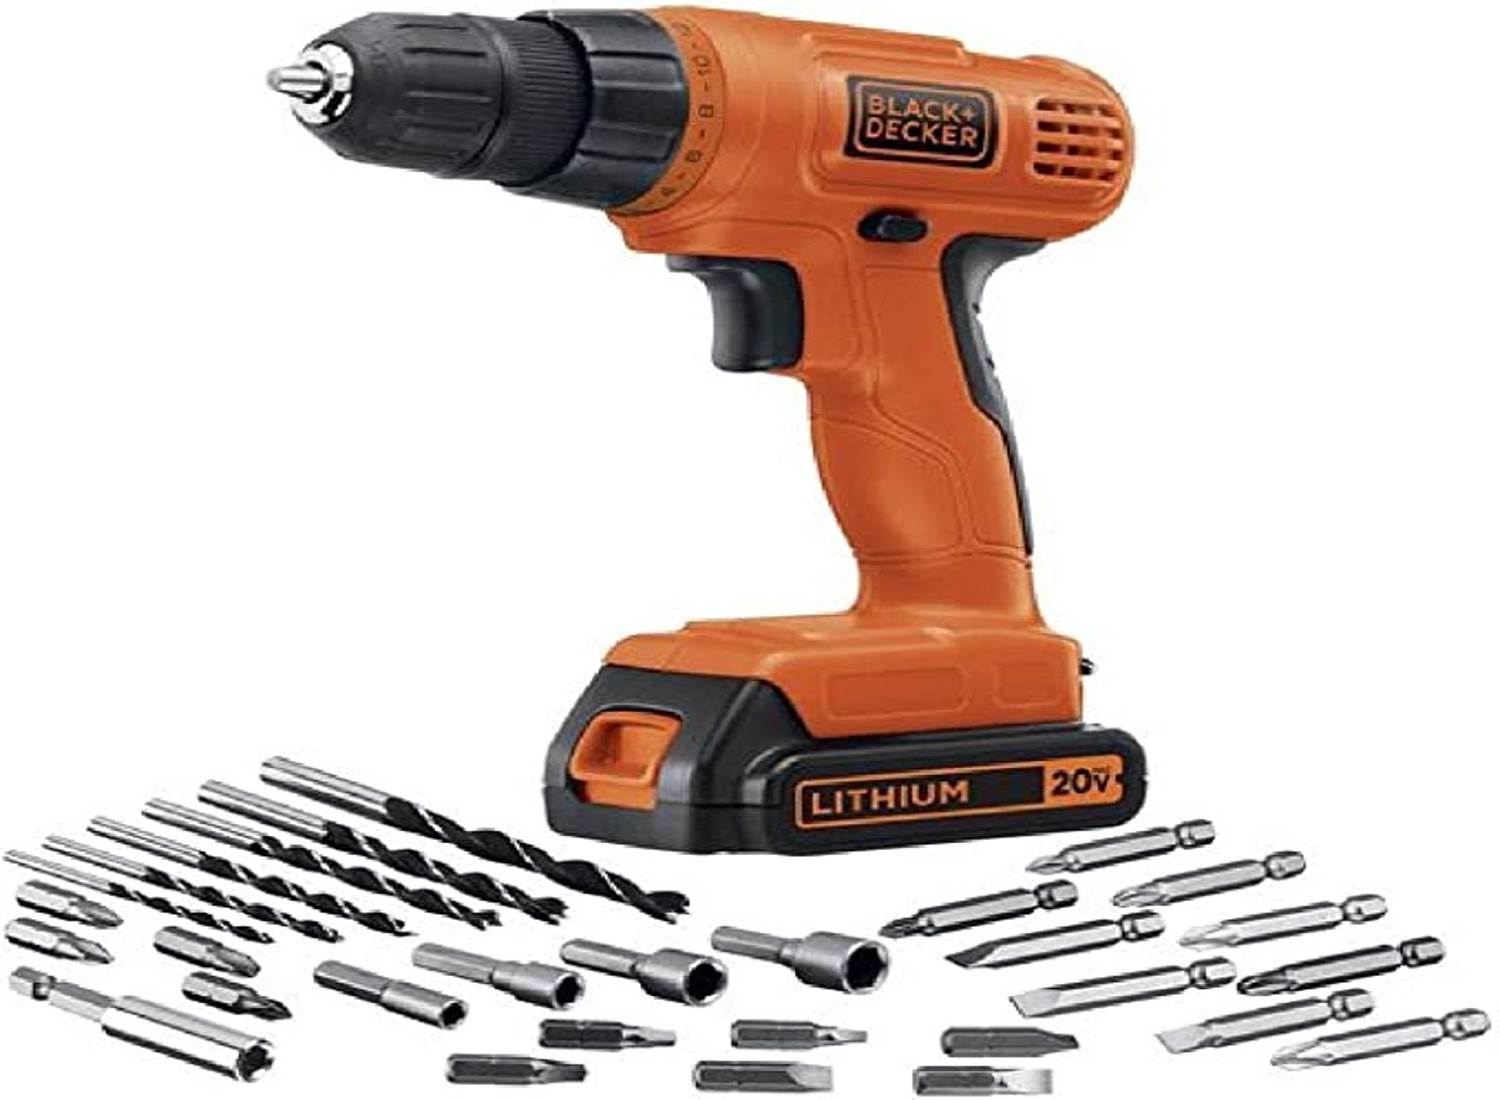 Orange Black+Decker cordless drill with accessories